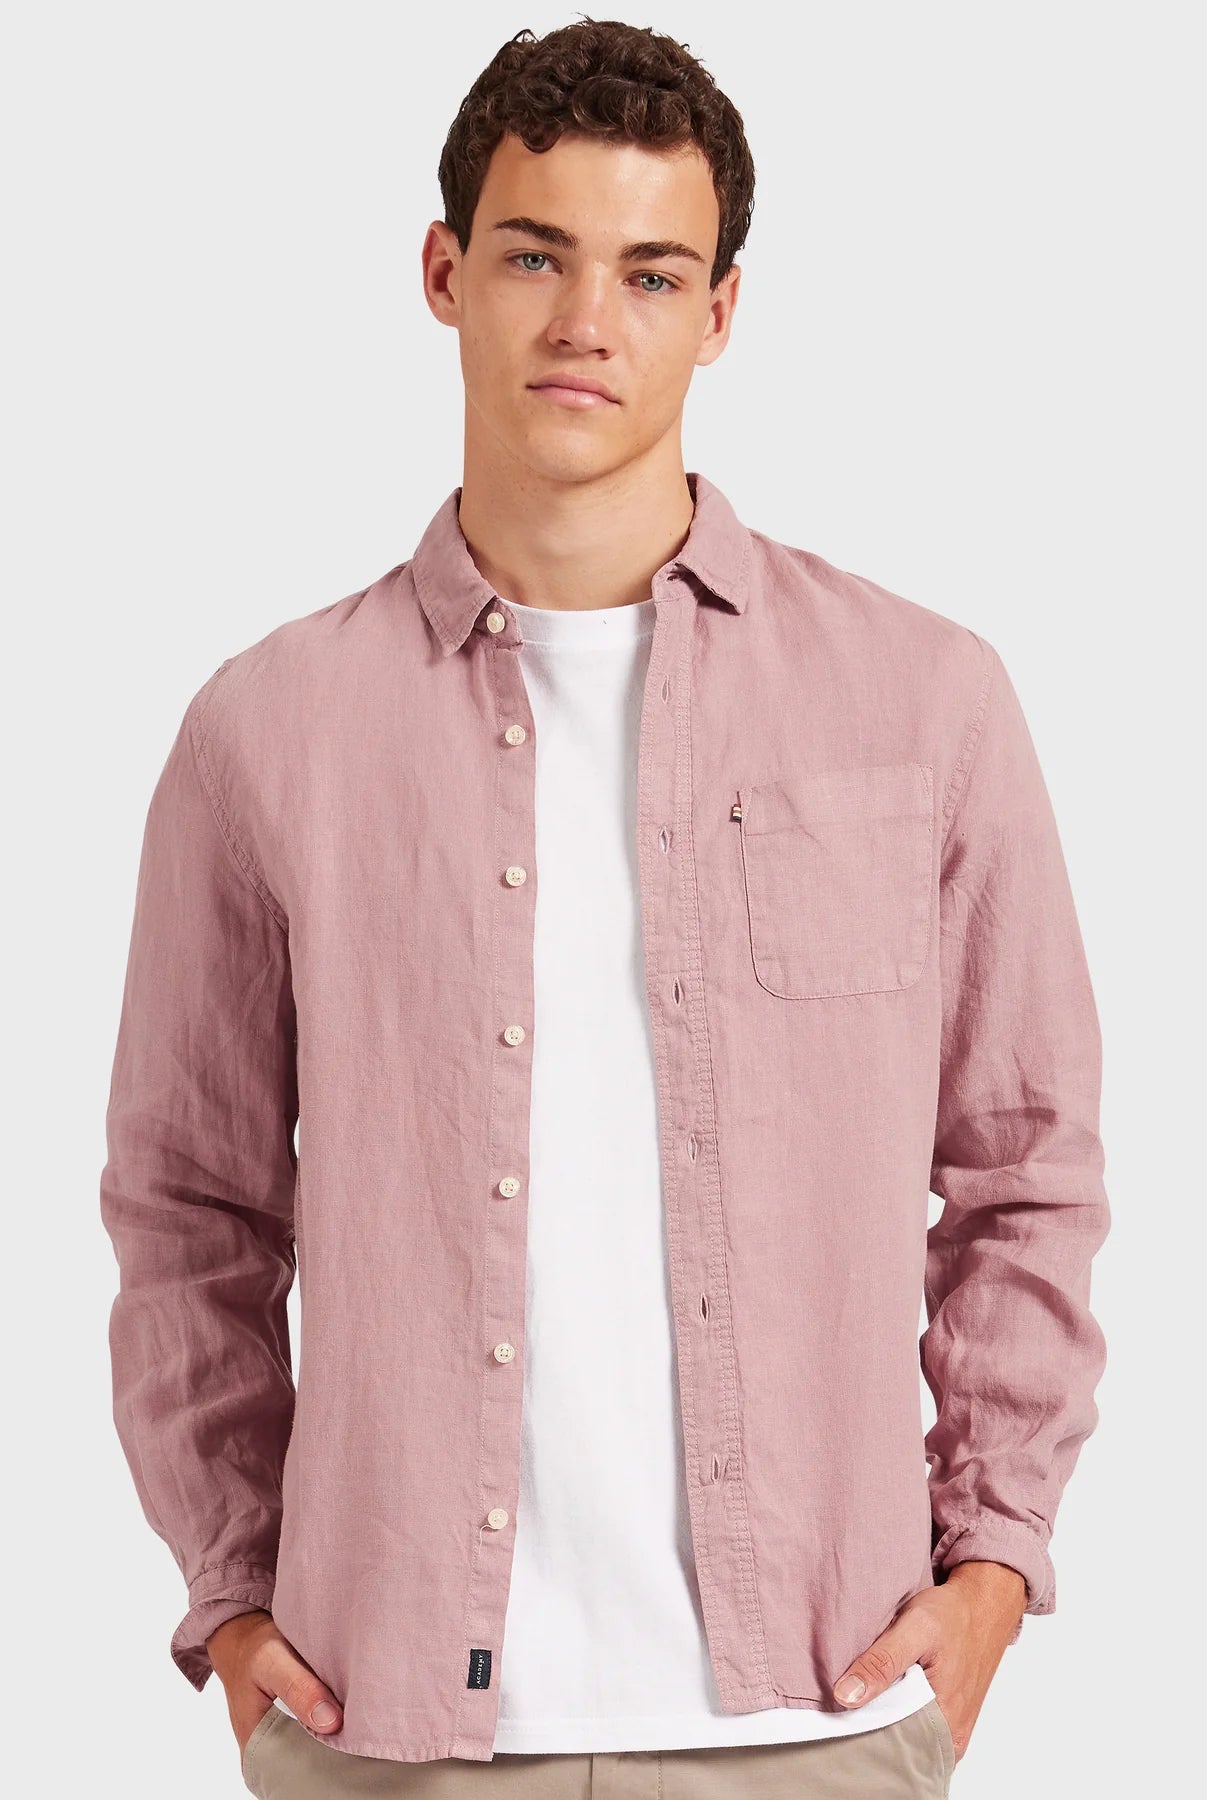 Hampton Linen Shirt in Iris Pink